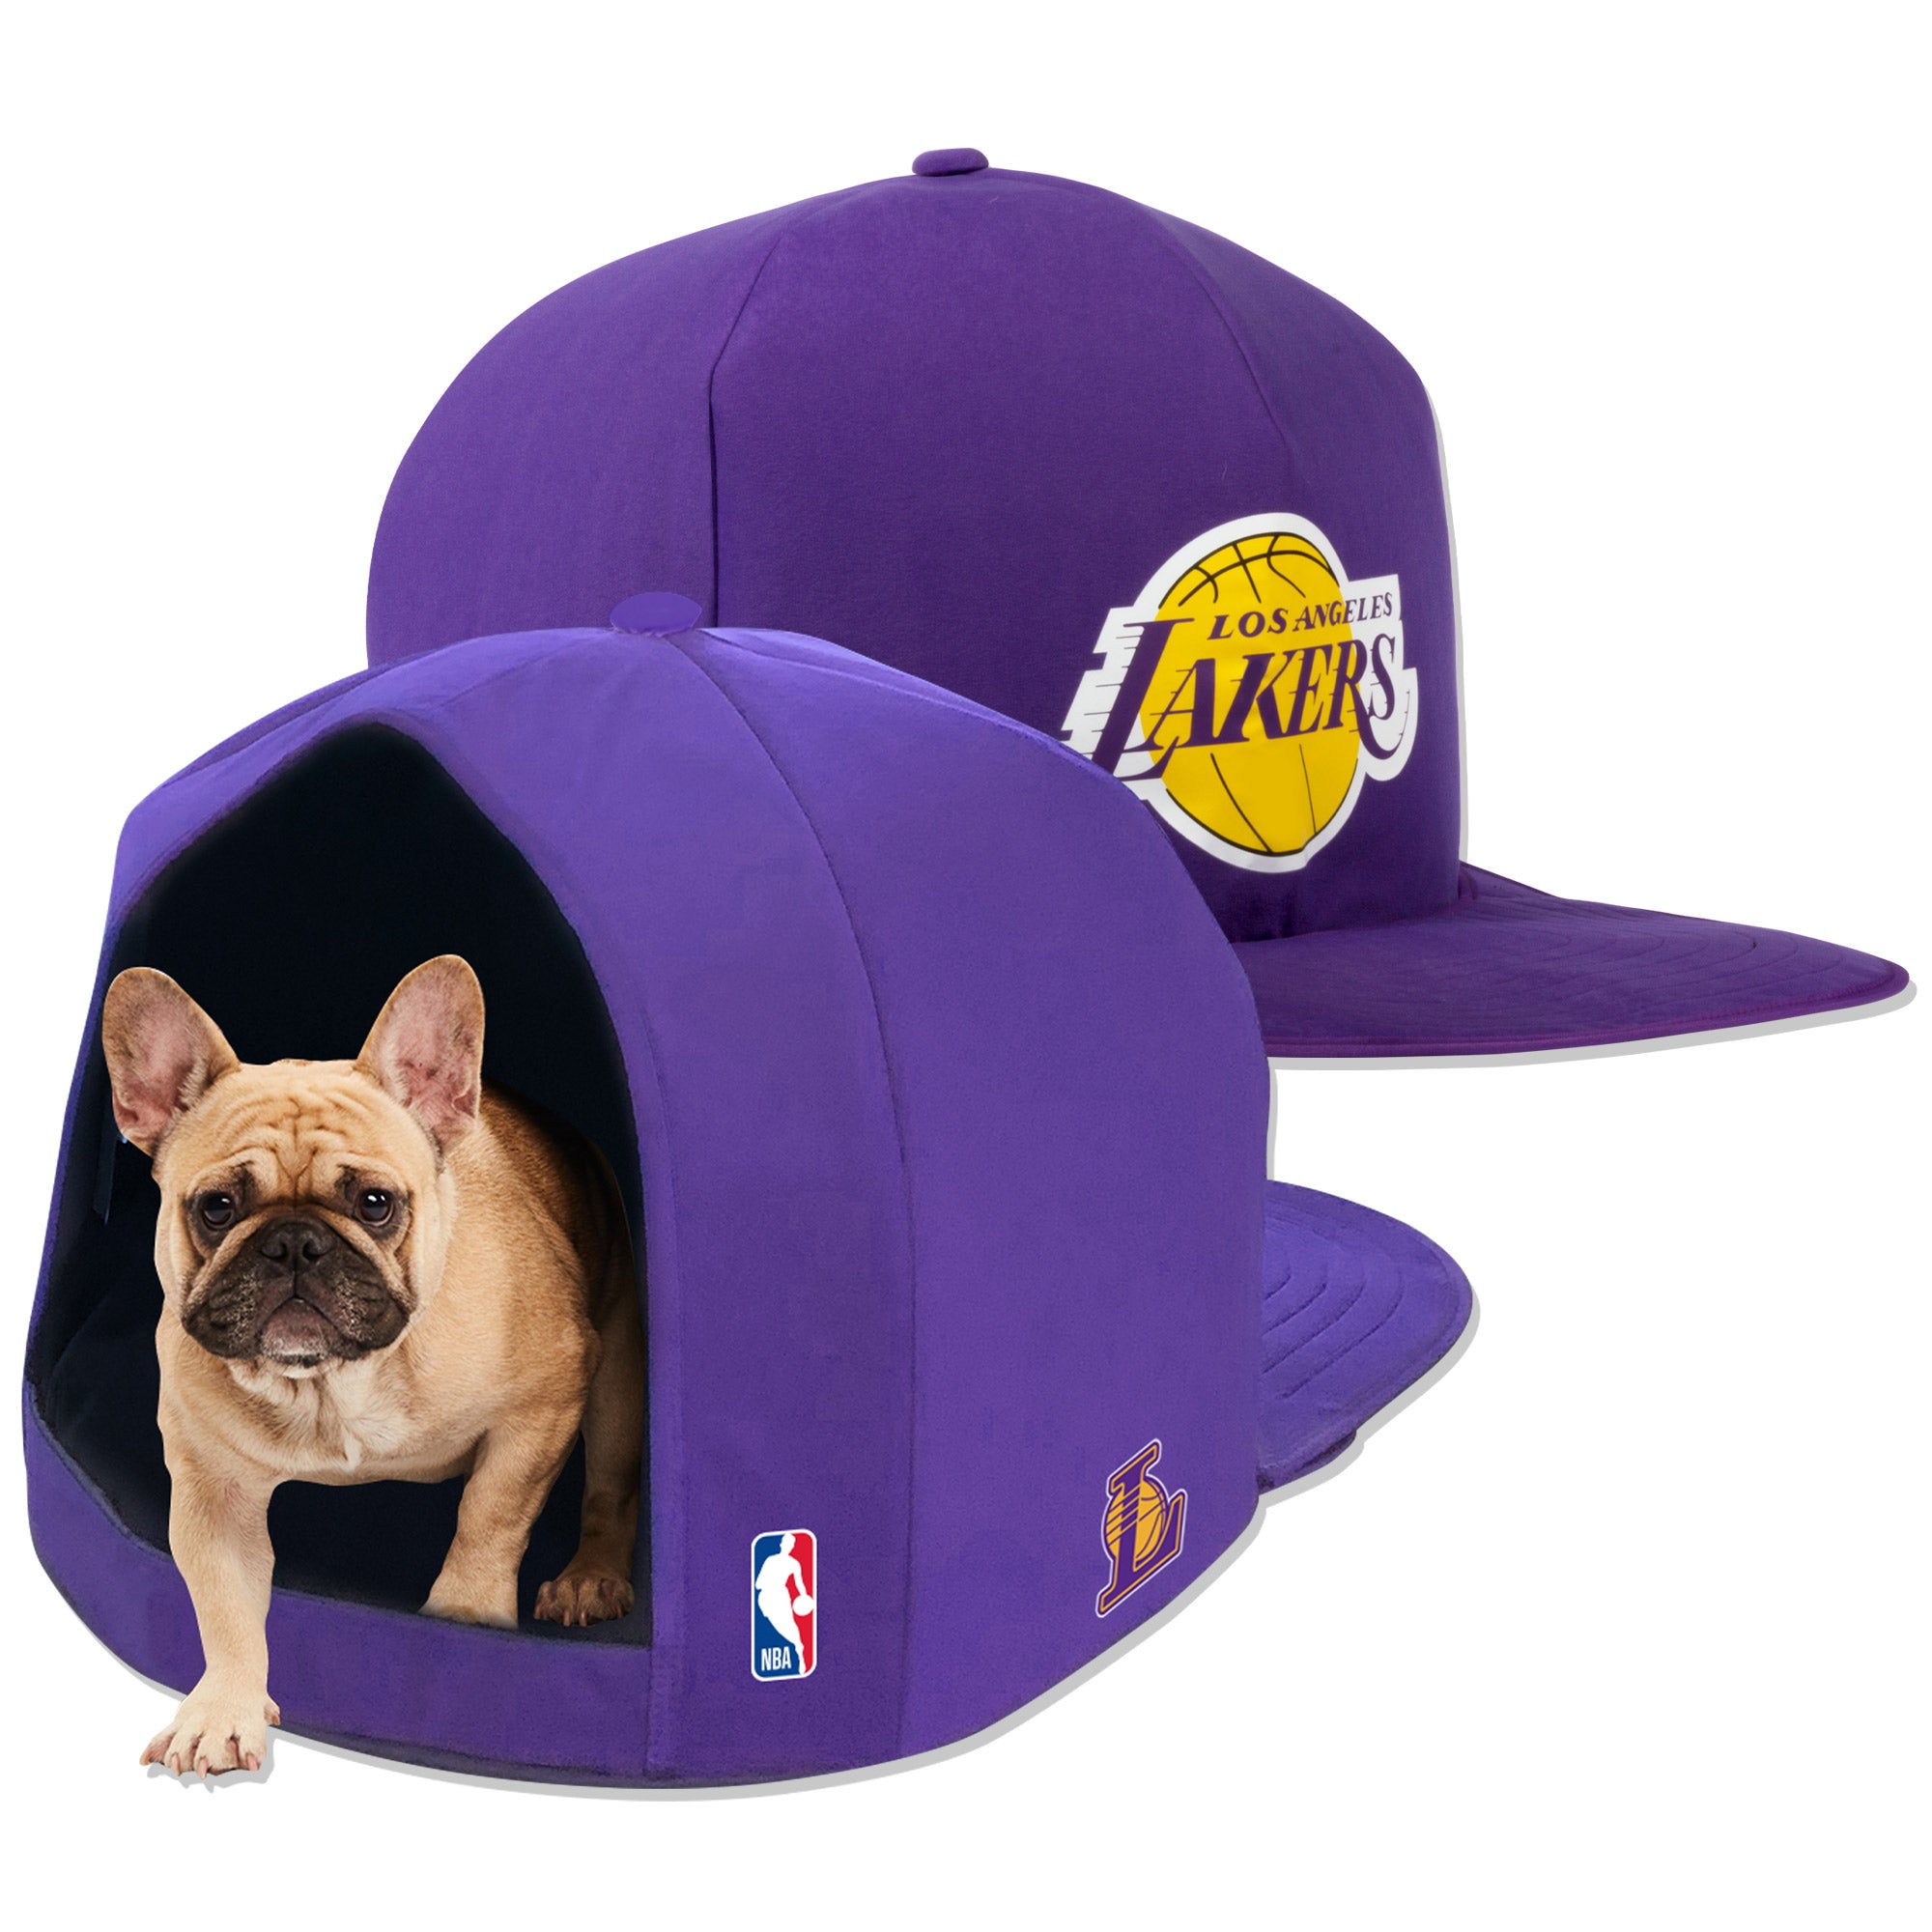 Nap Cap - Los Angeles Lakers Pet Bed Small